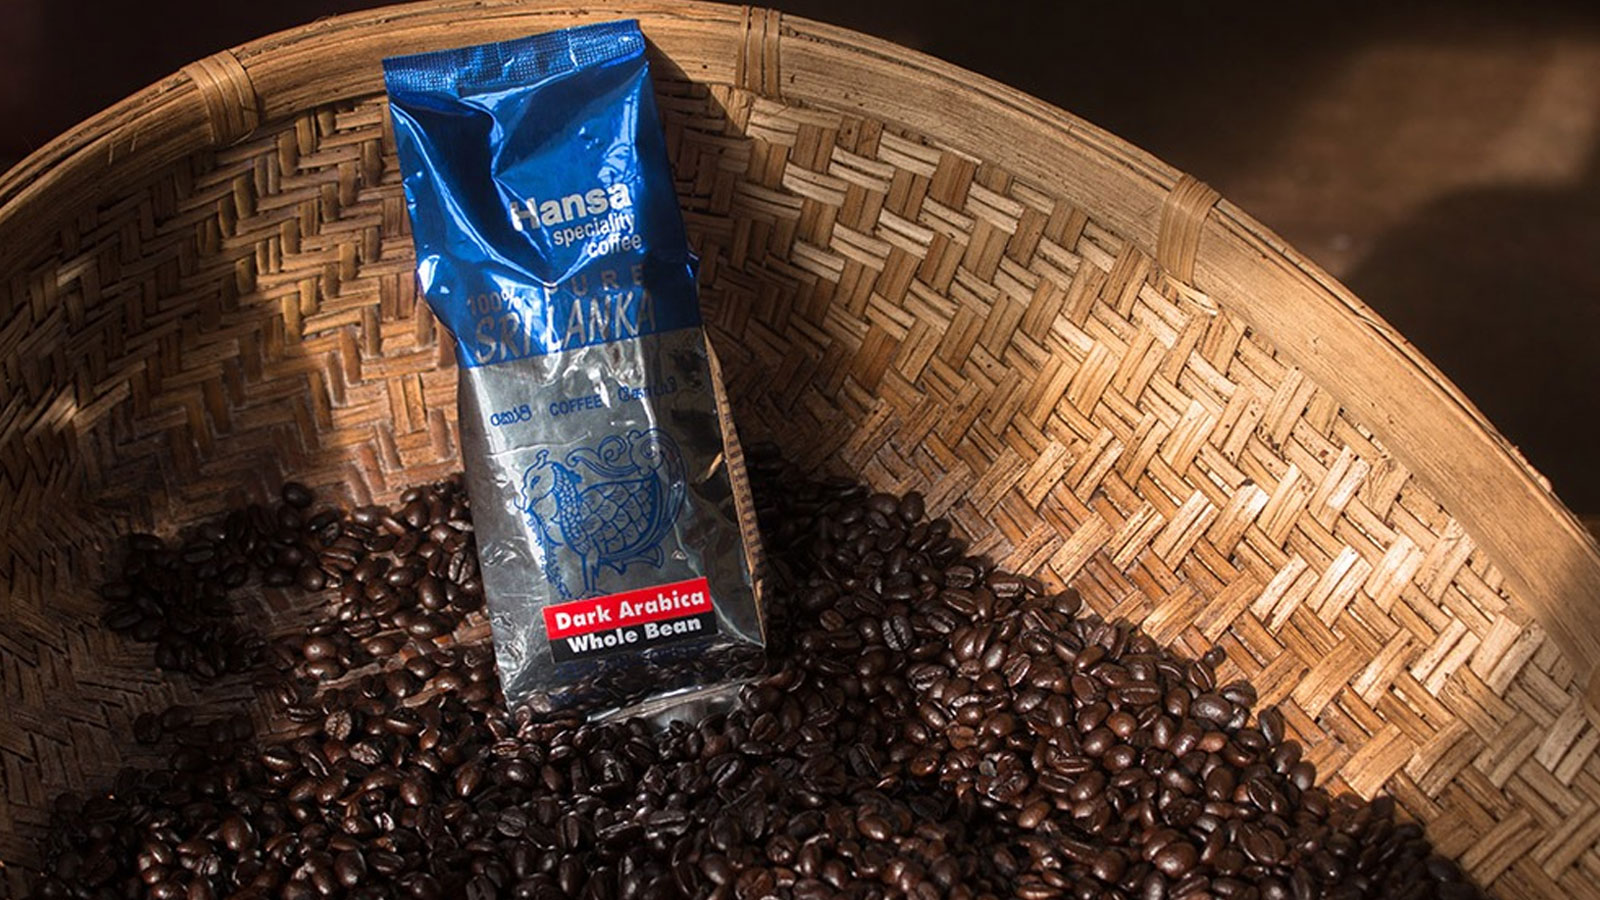 HANSA CEYLON COFFEE PVT LTD